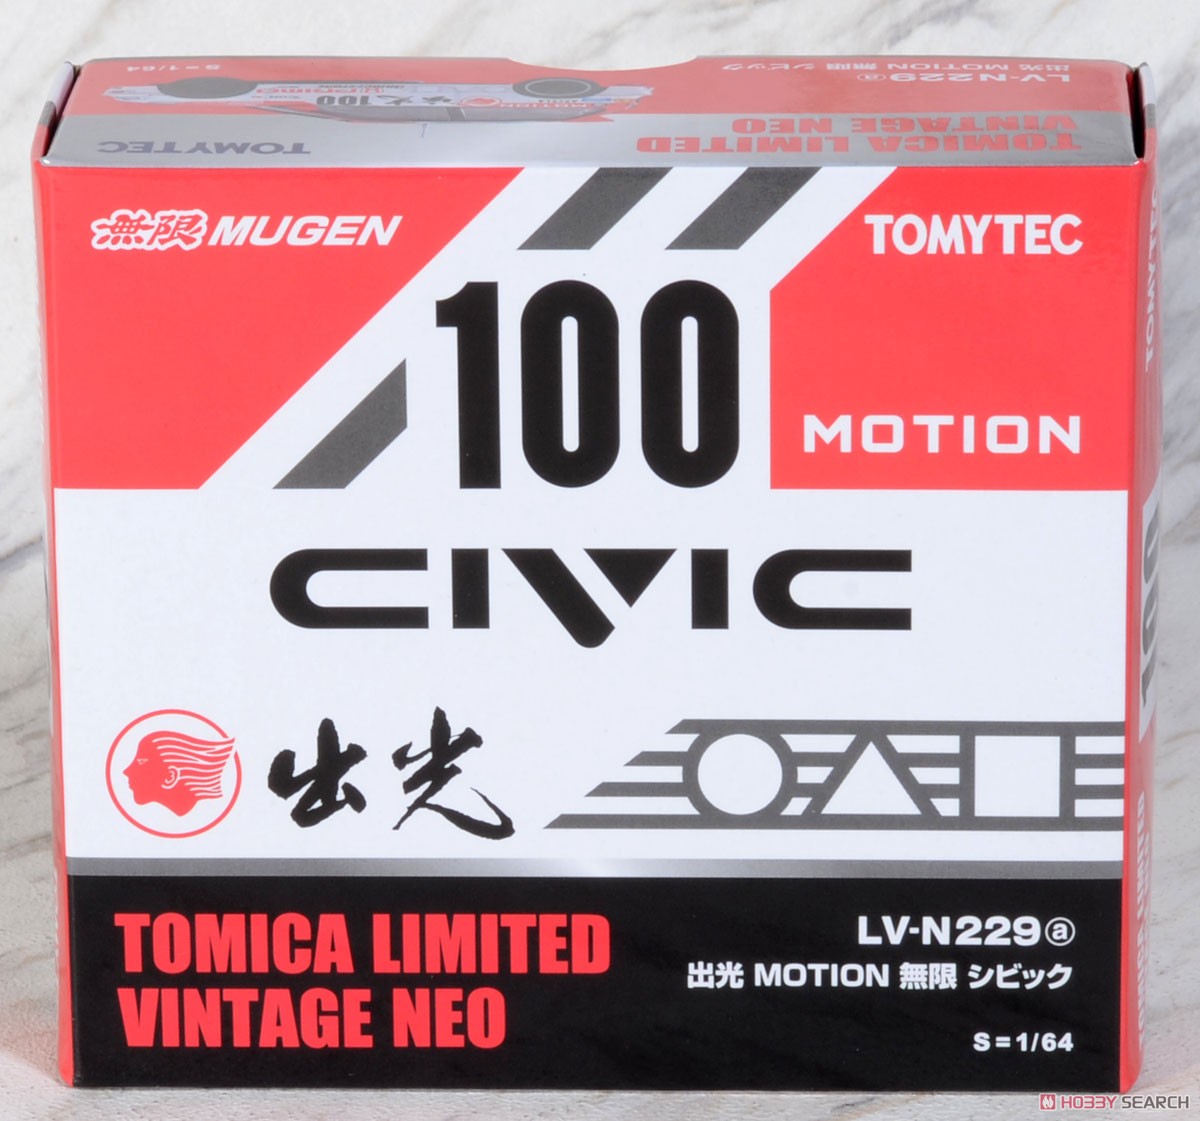 TLV-N229a Idemitsu Motion Mugen Civic (Diecast Car) Package1